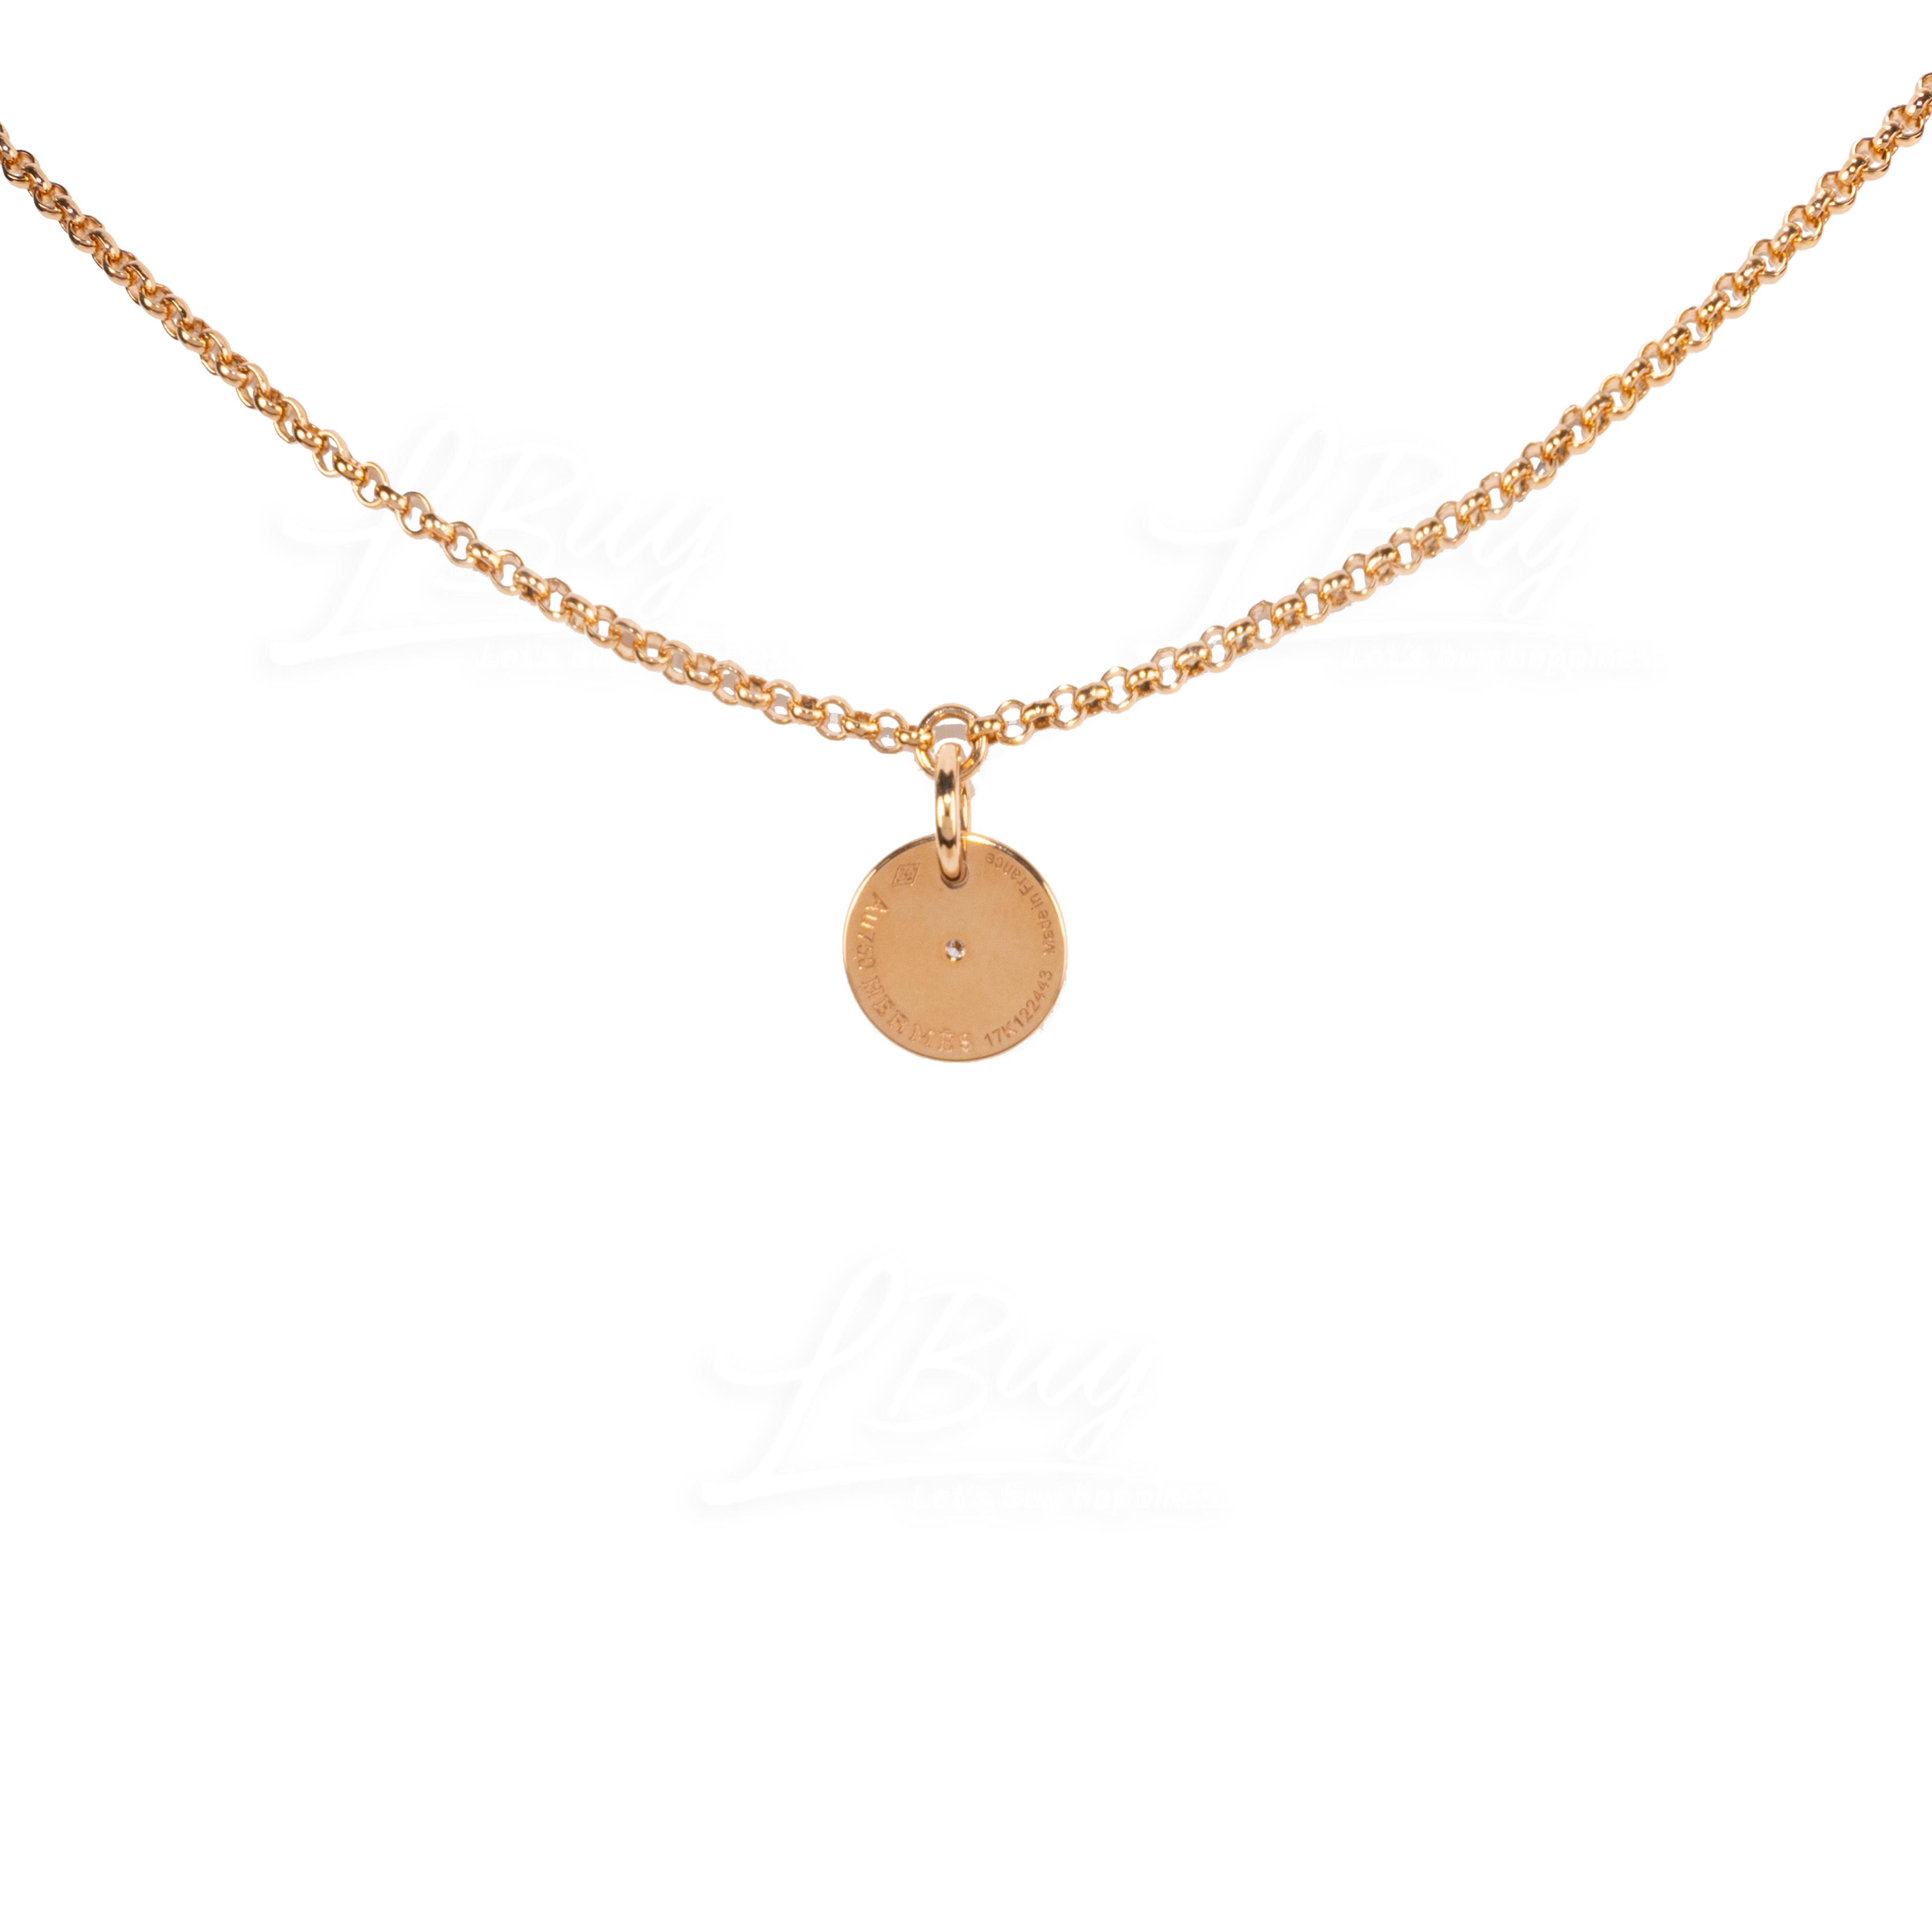 Hermes Au750 18K Diamond necklace